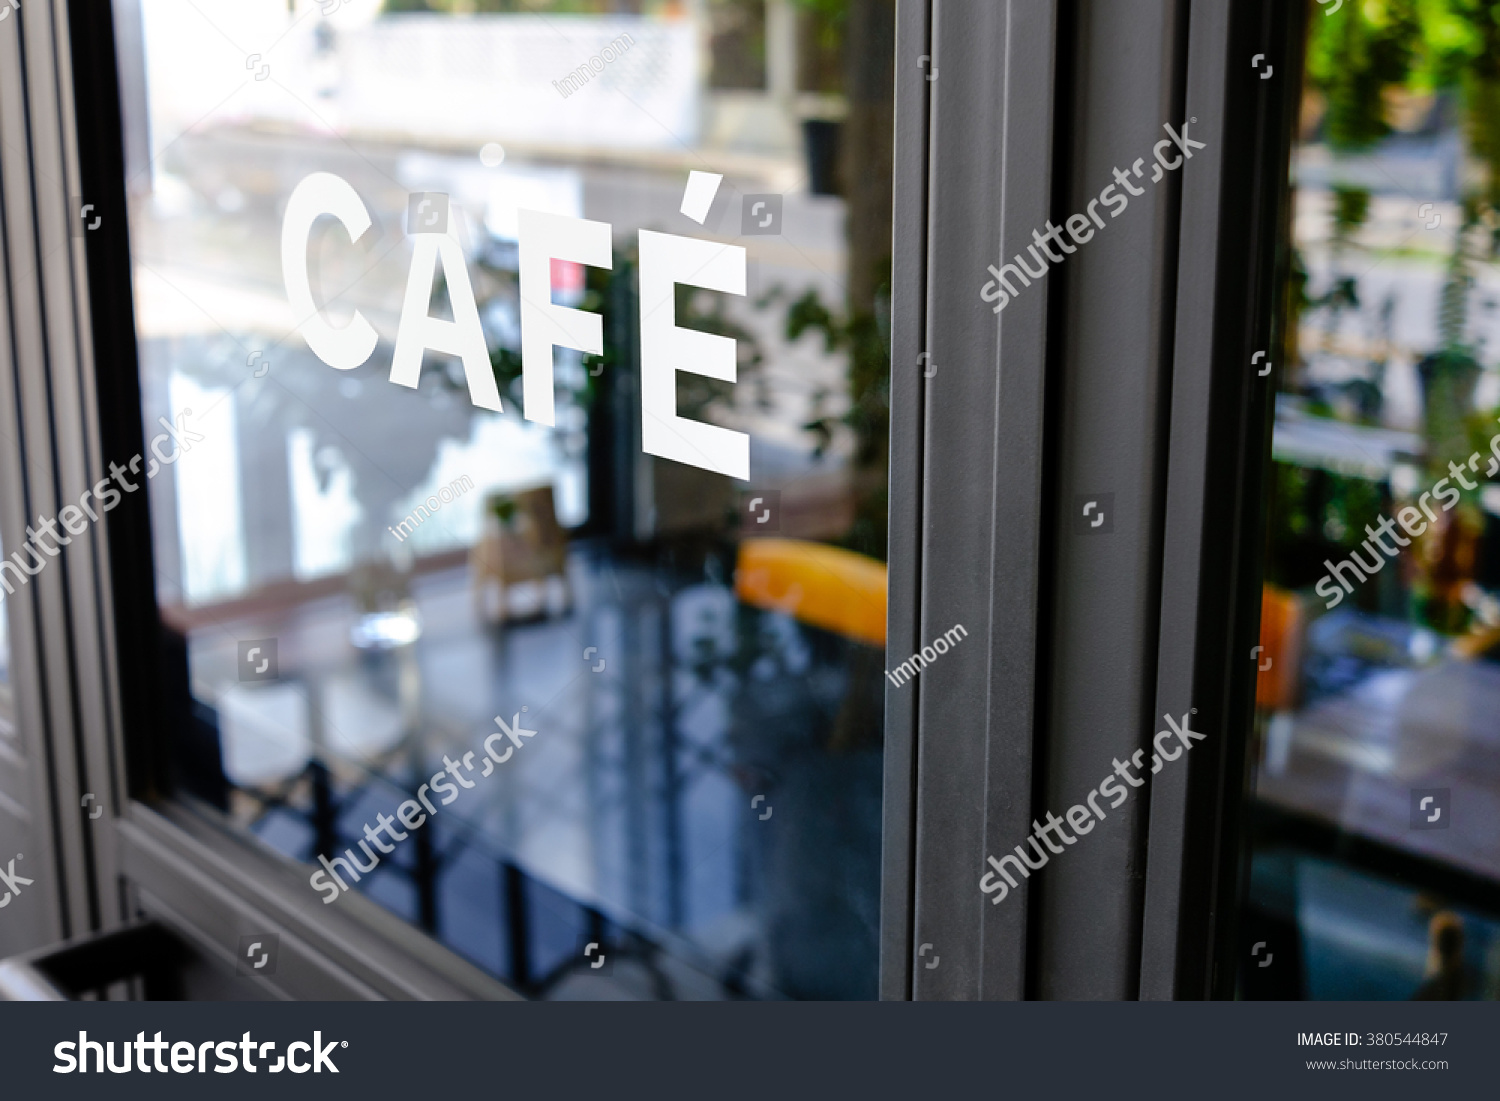 Alphabet cafe word on the window #380544847